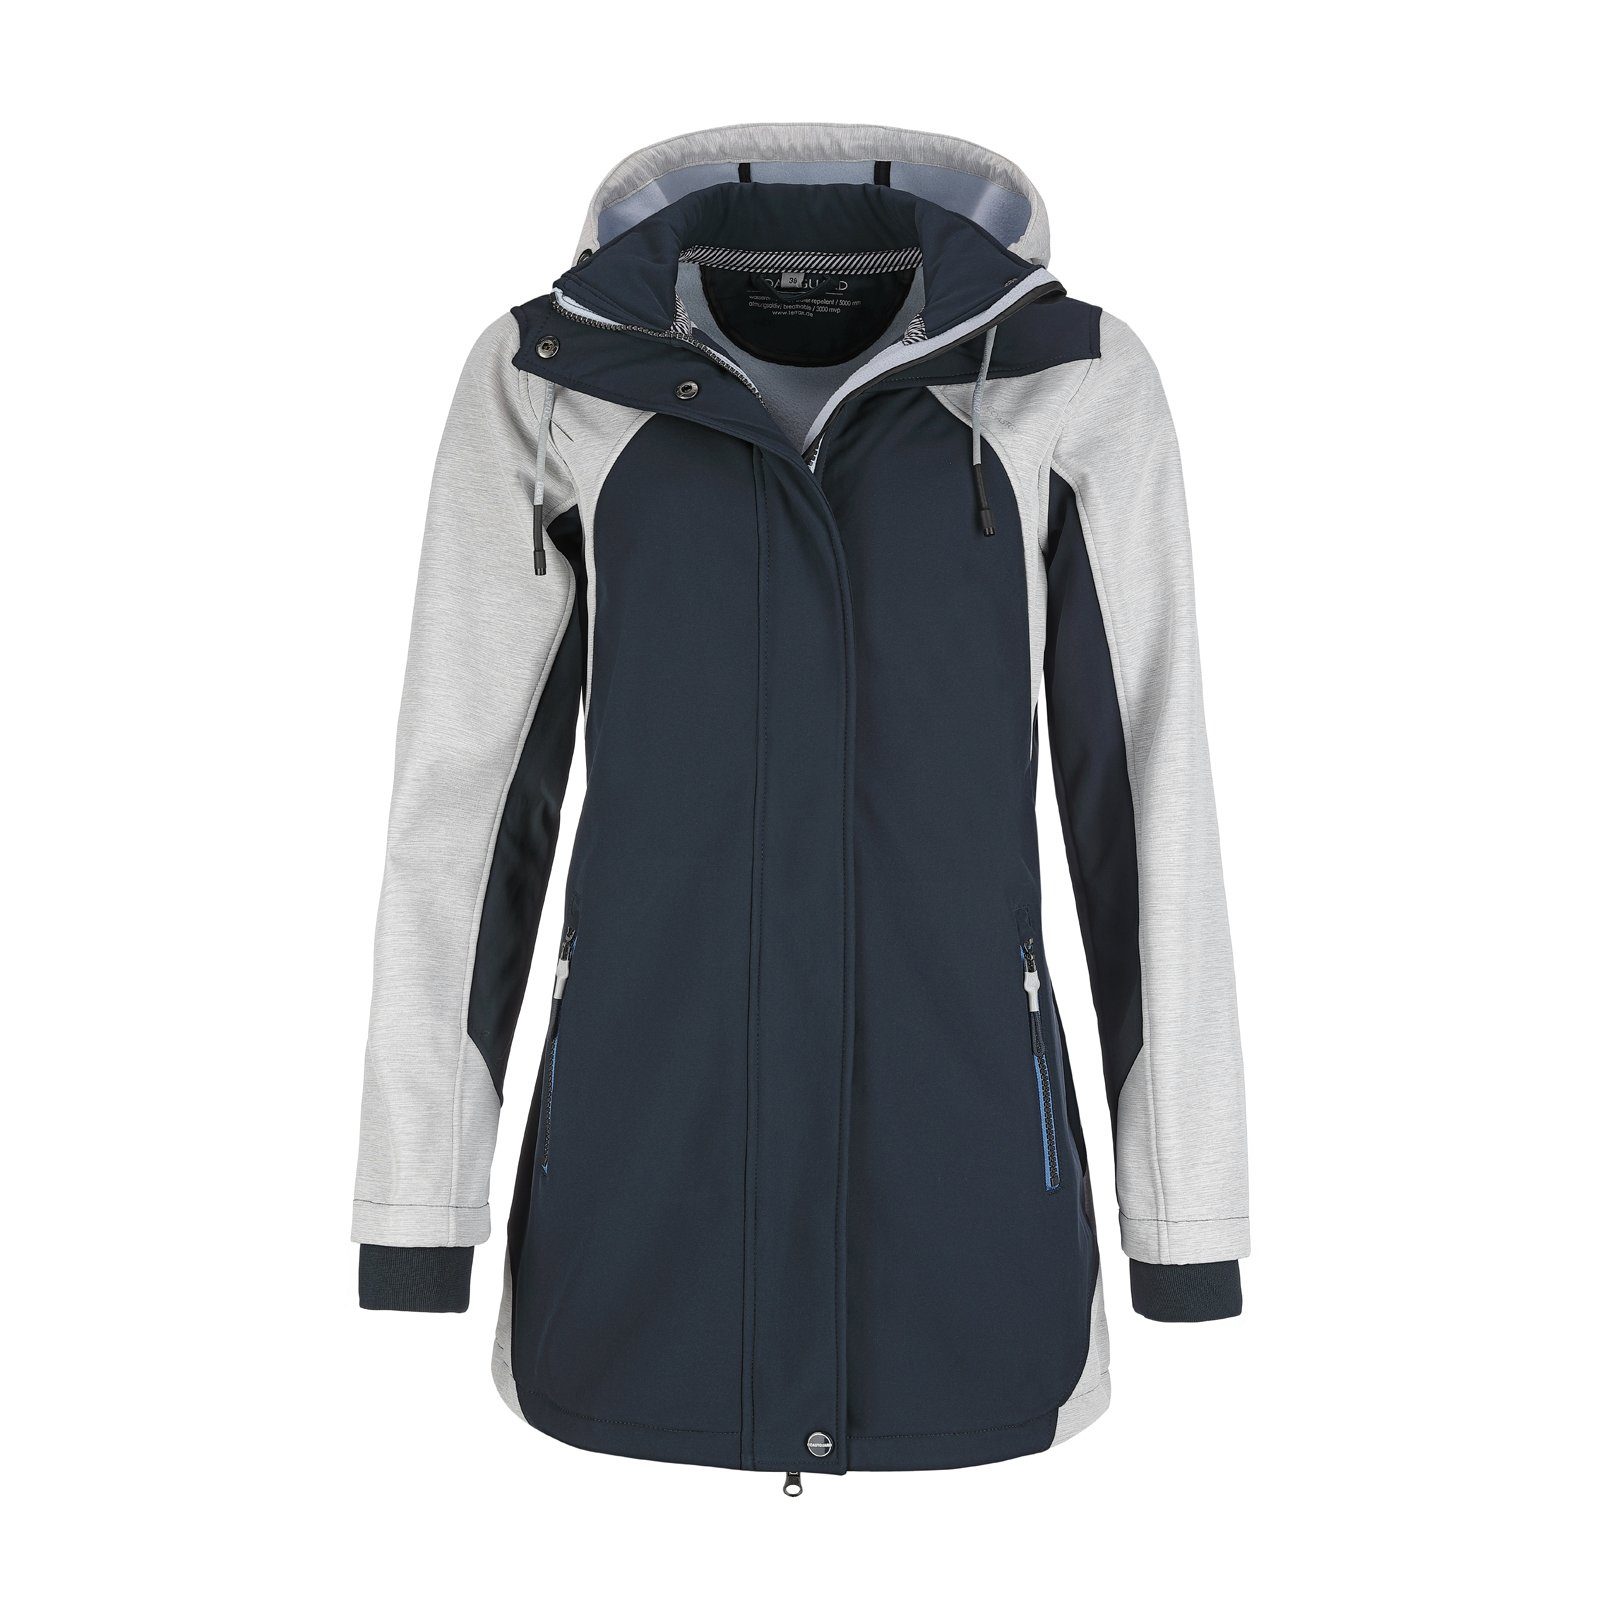 Coastguard Softshelljacke Damen Jacke zweifarbig – Outdoor-Jacke abnehmbarer Kapuze atmungsaktiv dunkelblau/hellgrau